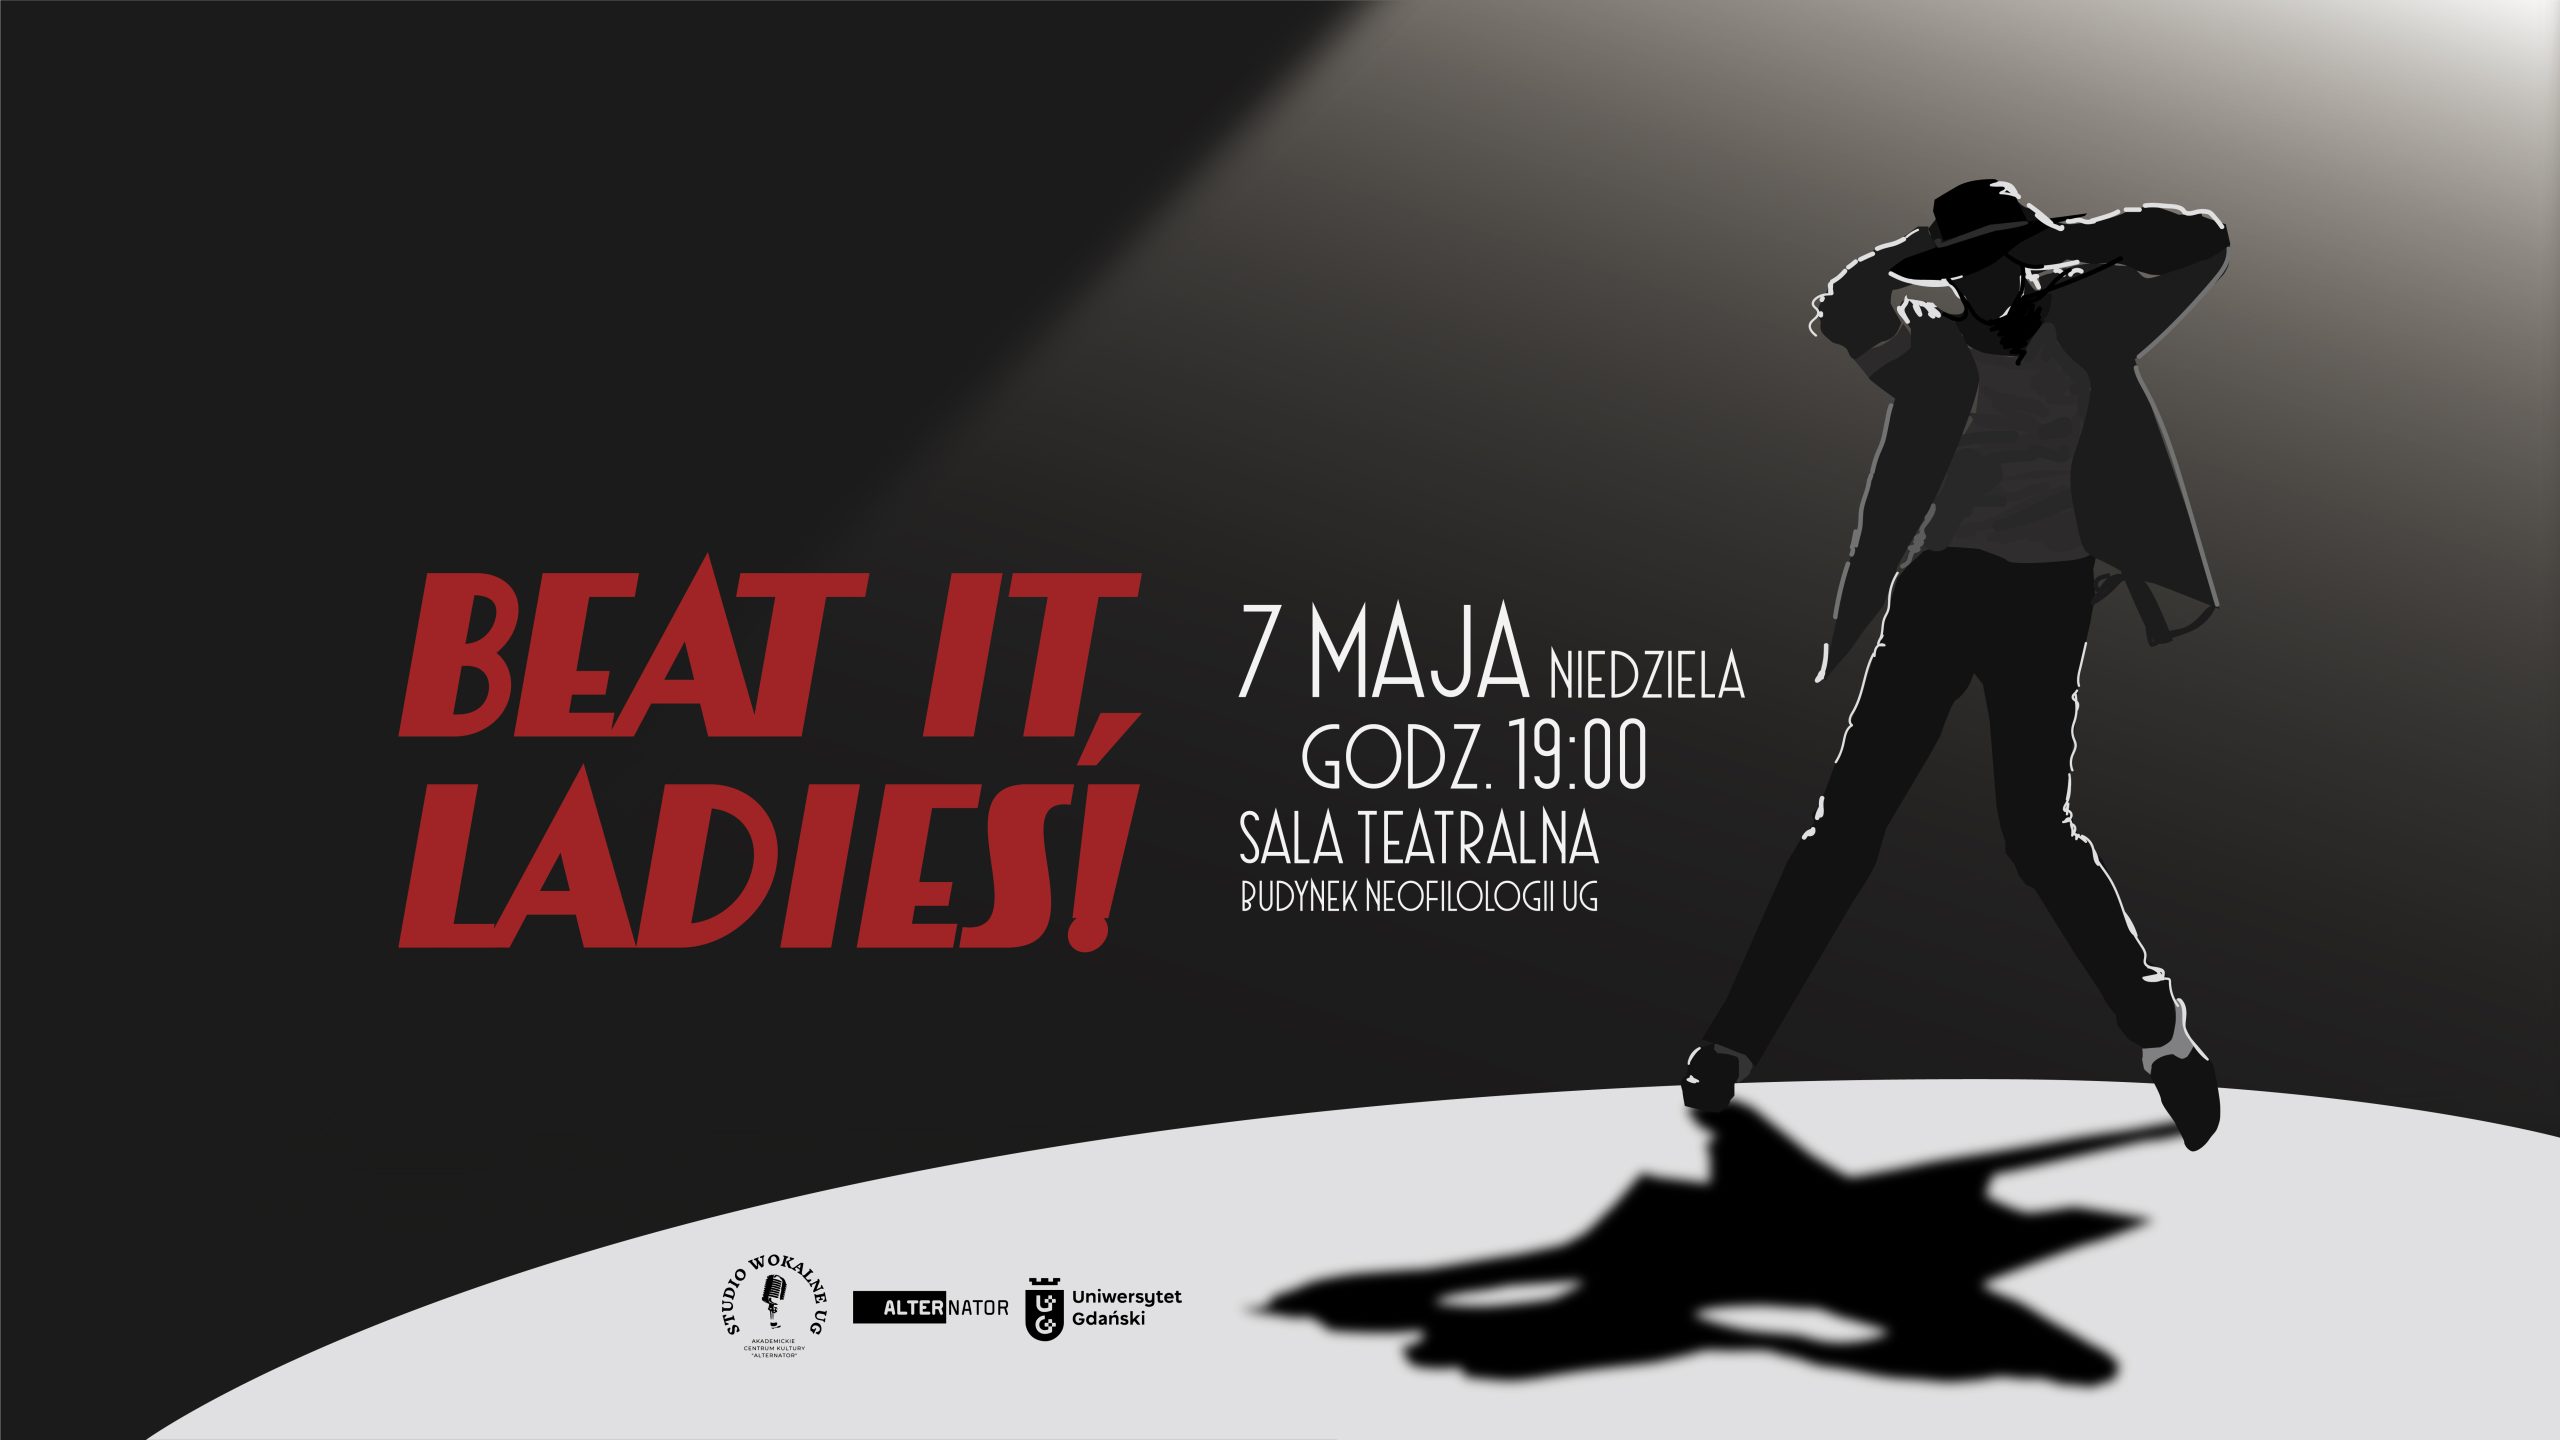 Beat it, ladies!